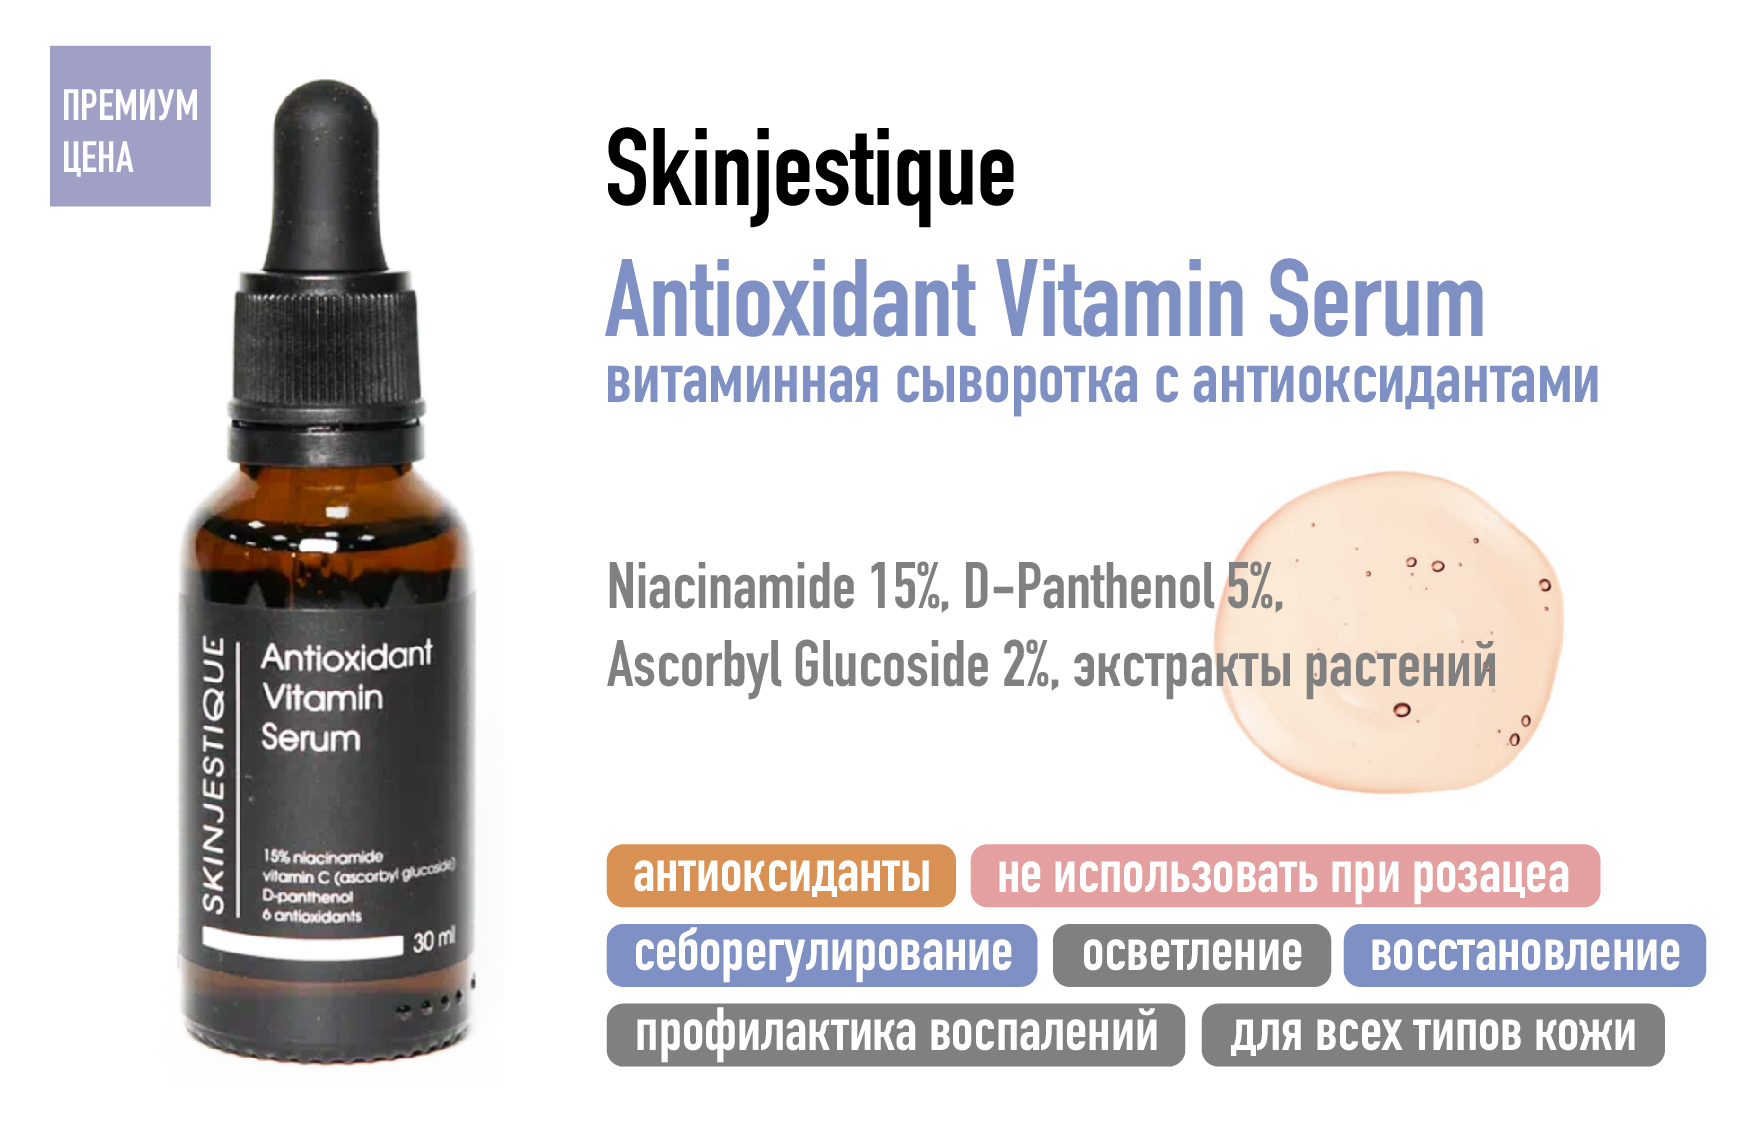 Skinjestique Antioxidant Vitamin Serum / Витаминная сыворотка с антиоксидантами